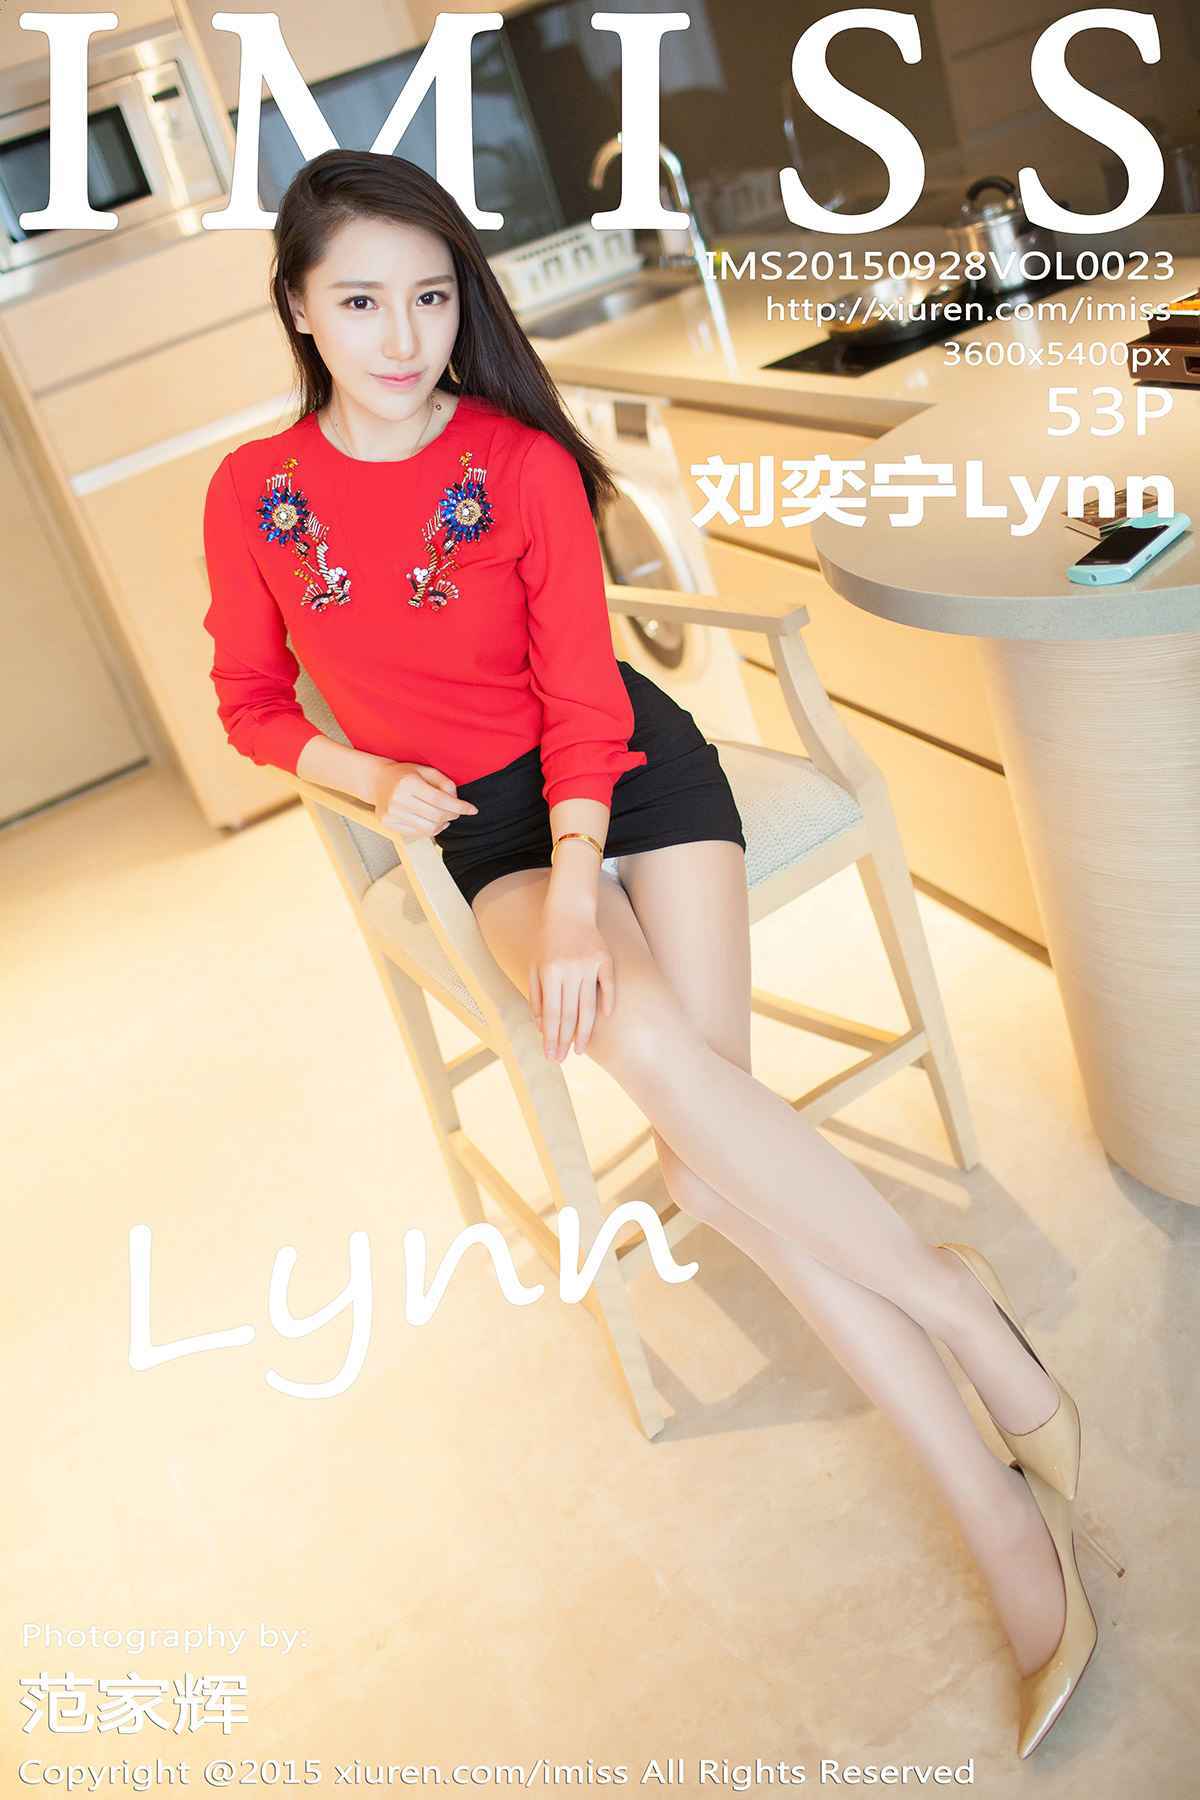 [Imiss amiss] 2015.09.28 vol.023 Liu Yining Lynn